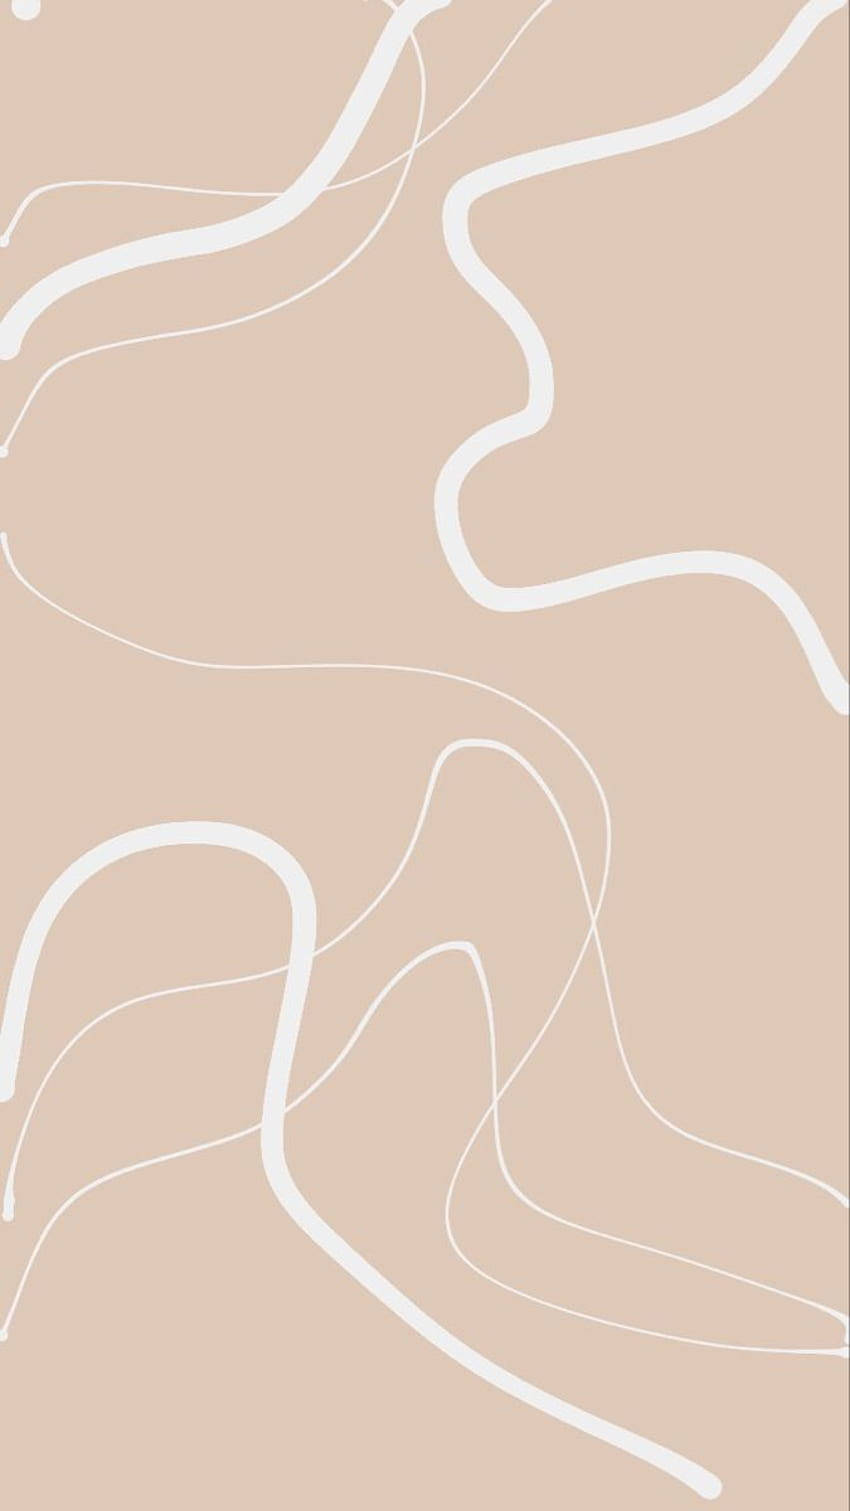 Comforting shades of beige pastel evoke a peaceful atmosphere Wallpaper